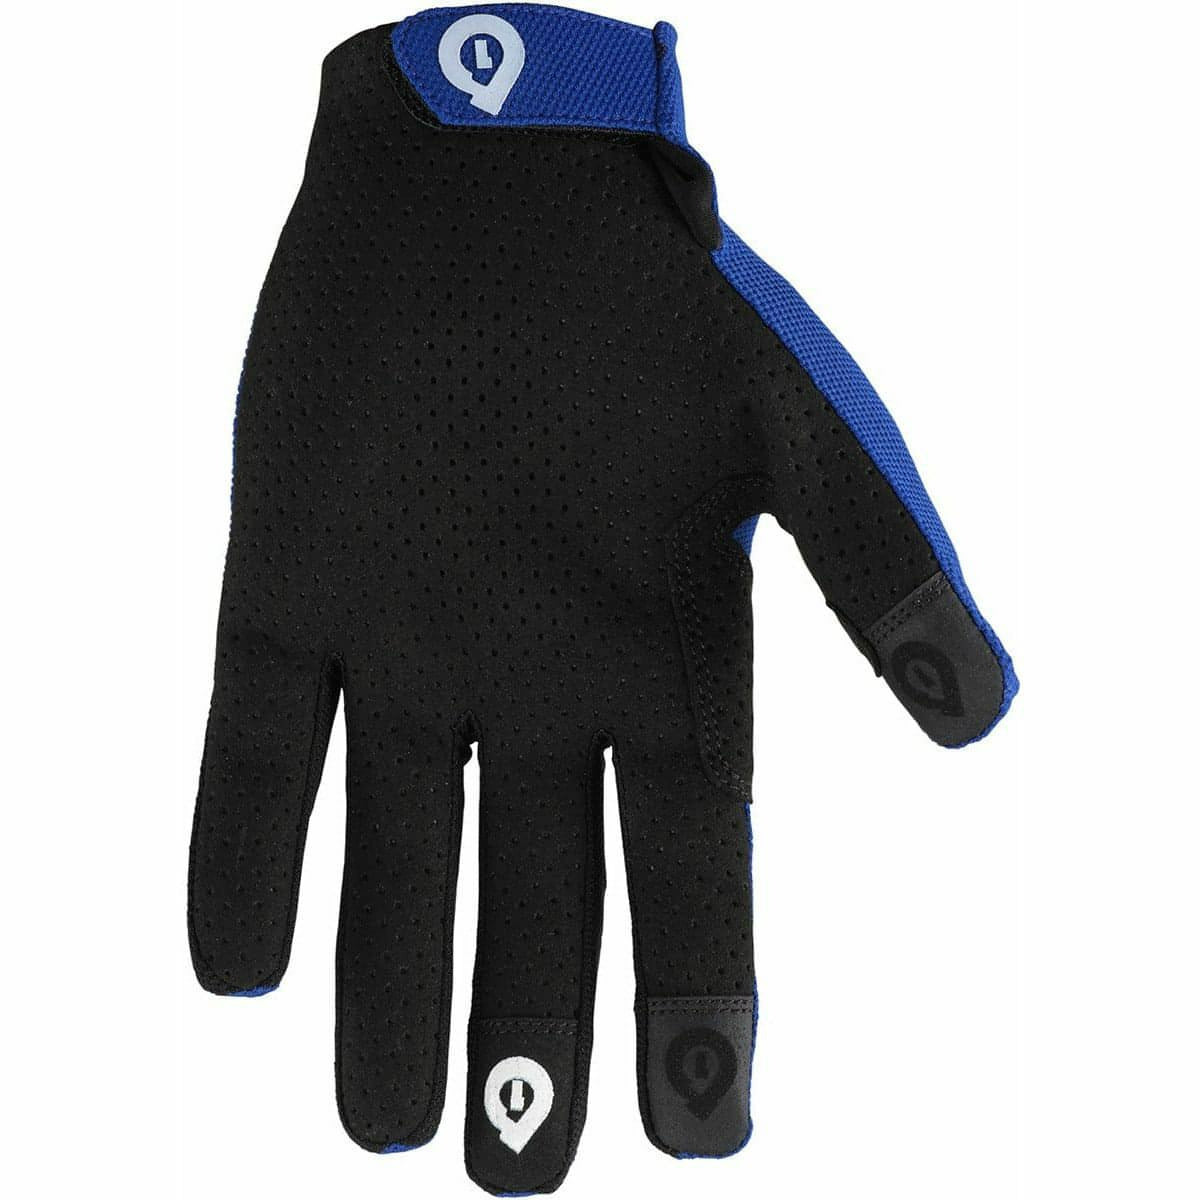 SixSixOne Raji Full Finger Cycling Gloves - Blue - Start Fitness